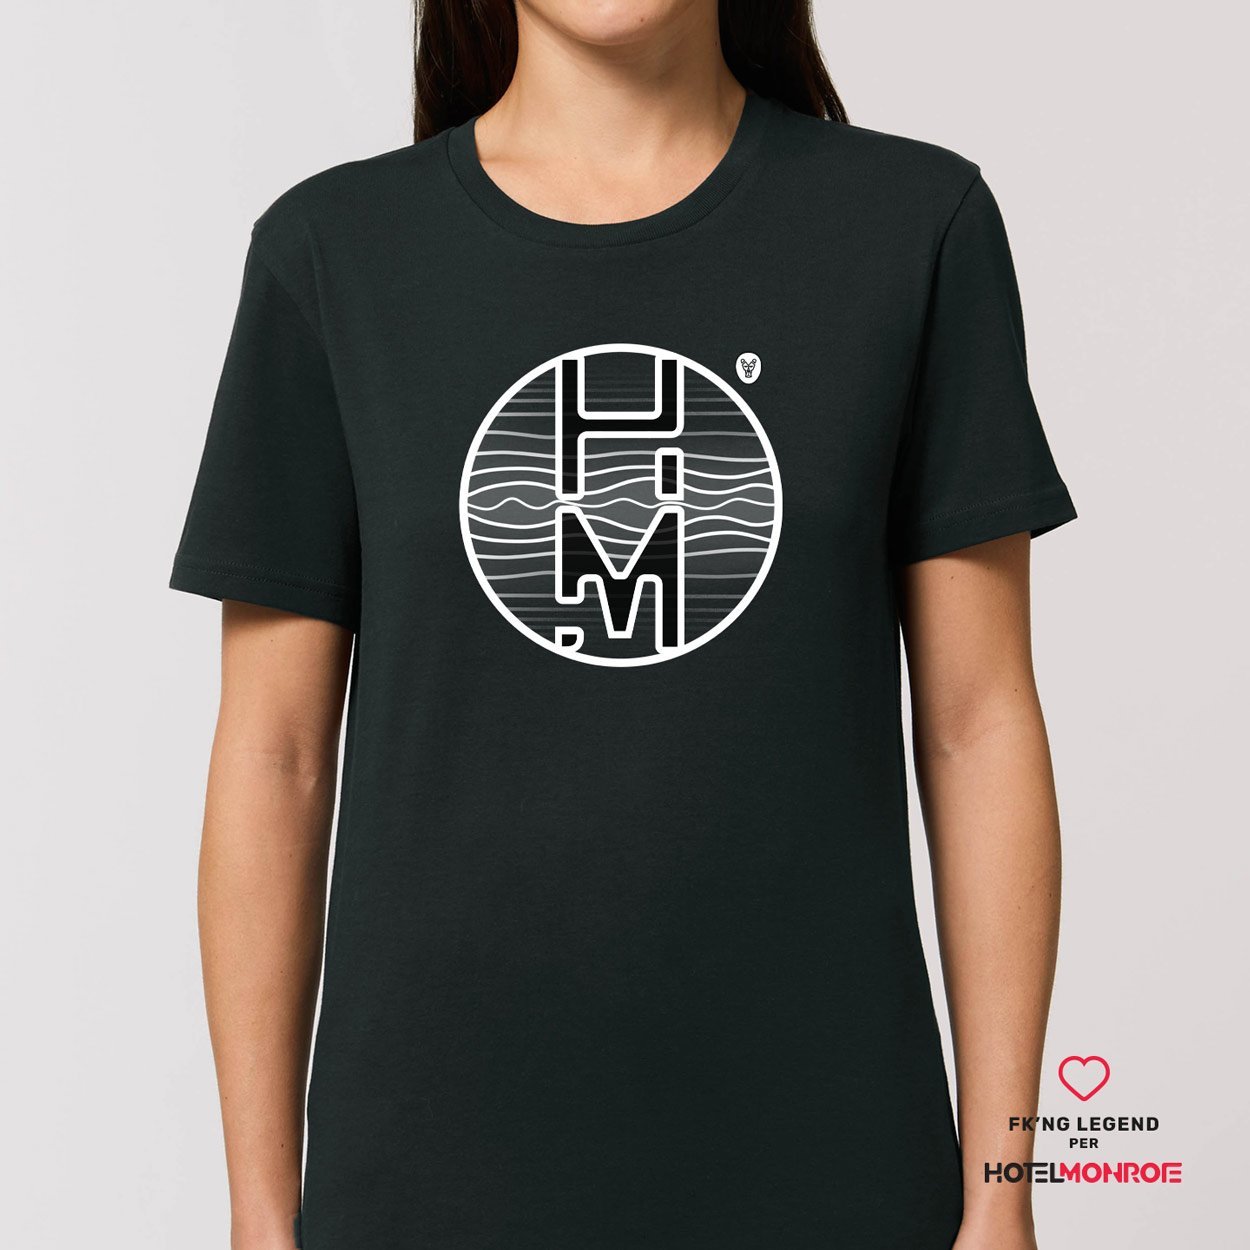 
                  
                    T-Shirt UNISEX - HOTEL MONROE - Black - FK'NG LEGEND
                  
                